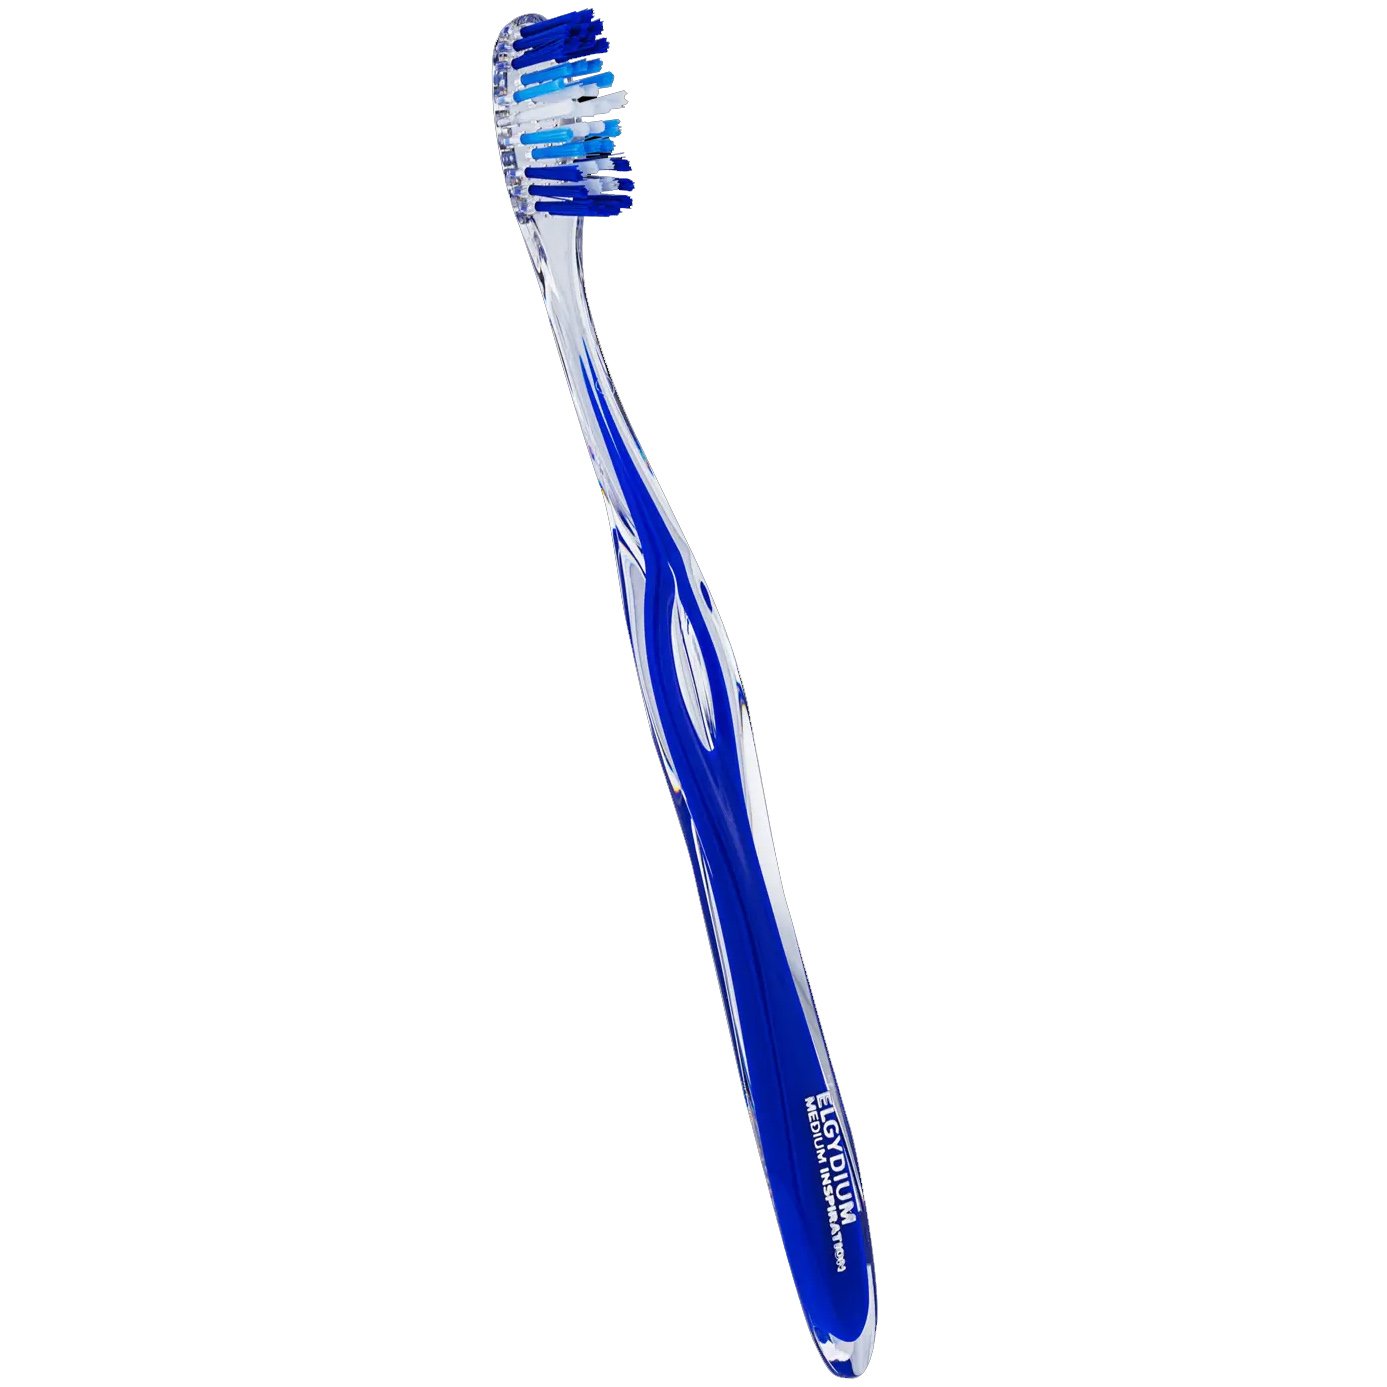 Elgydium Inspiration Medium Εργονομική Χειροκίνητη Οδοντόβουρτσα Για Άνετο Καθαρισμό Μεσαίο Μέγεθος 1 Τεμάχιο – Μπλε